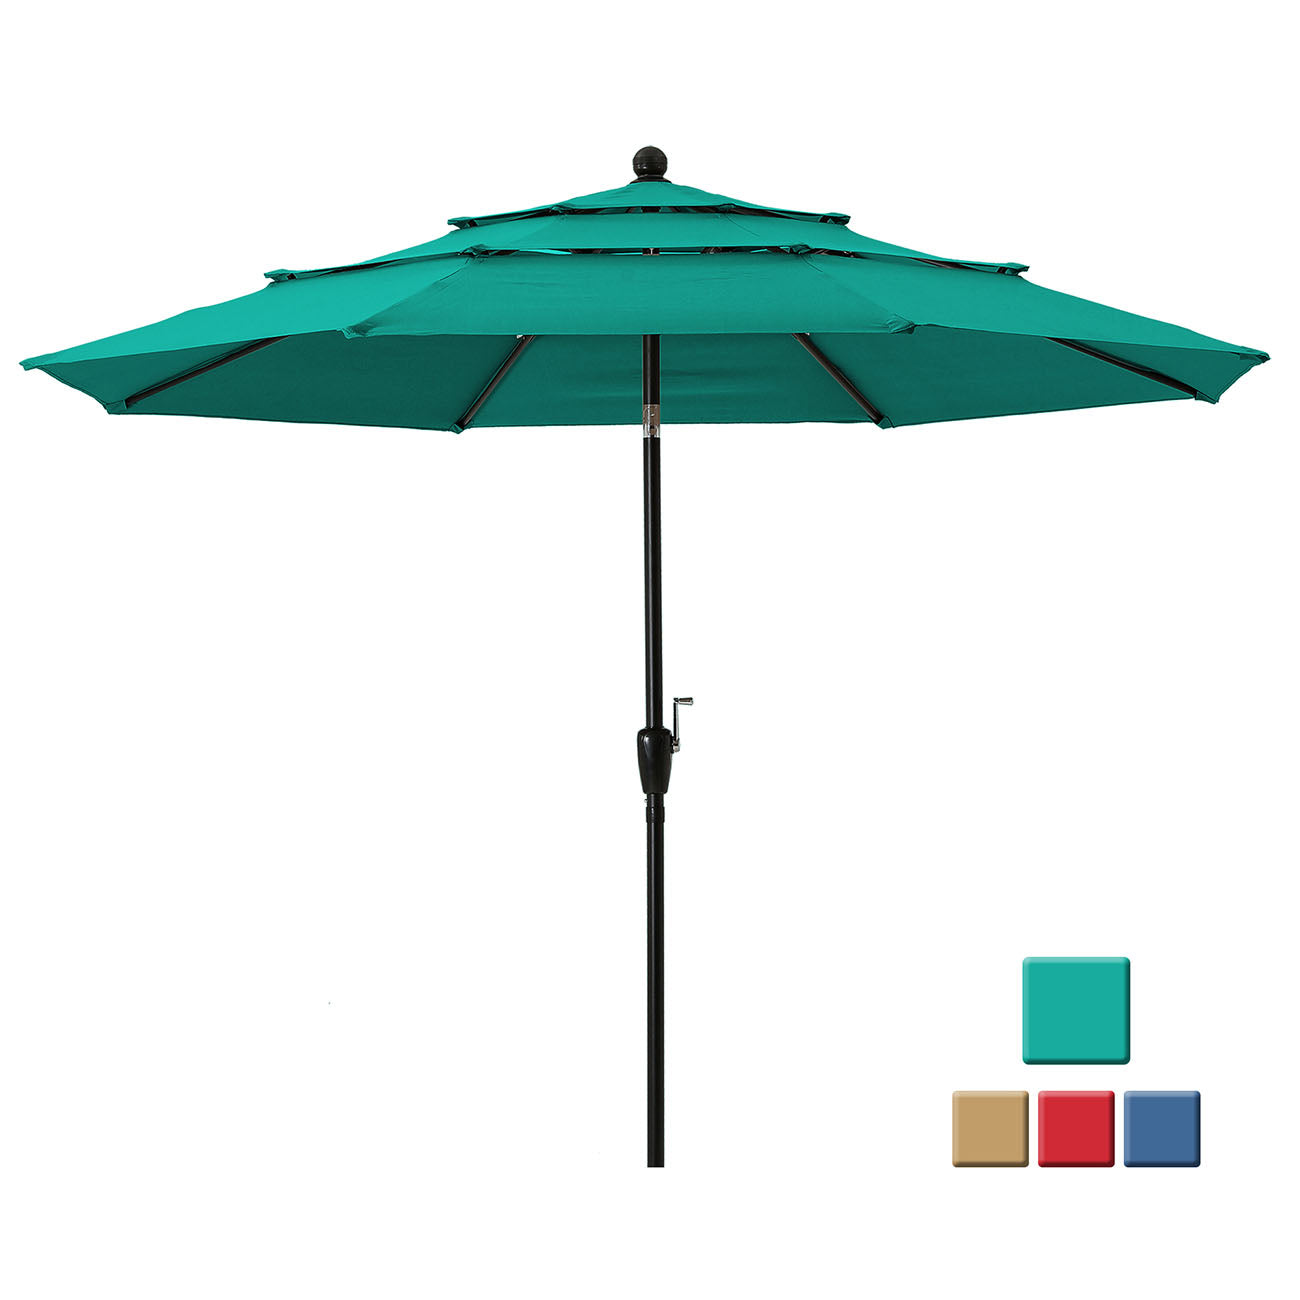 Boyel Living 10ft Patio Umbrella with Double Air Vent (Turquoise)-Boyel Living